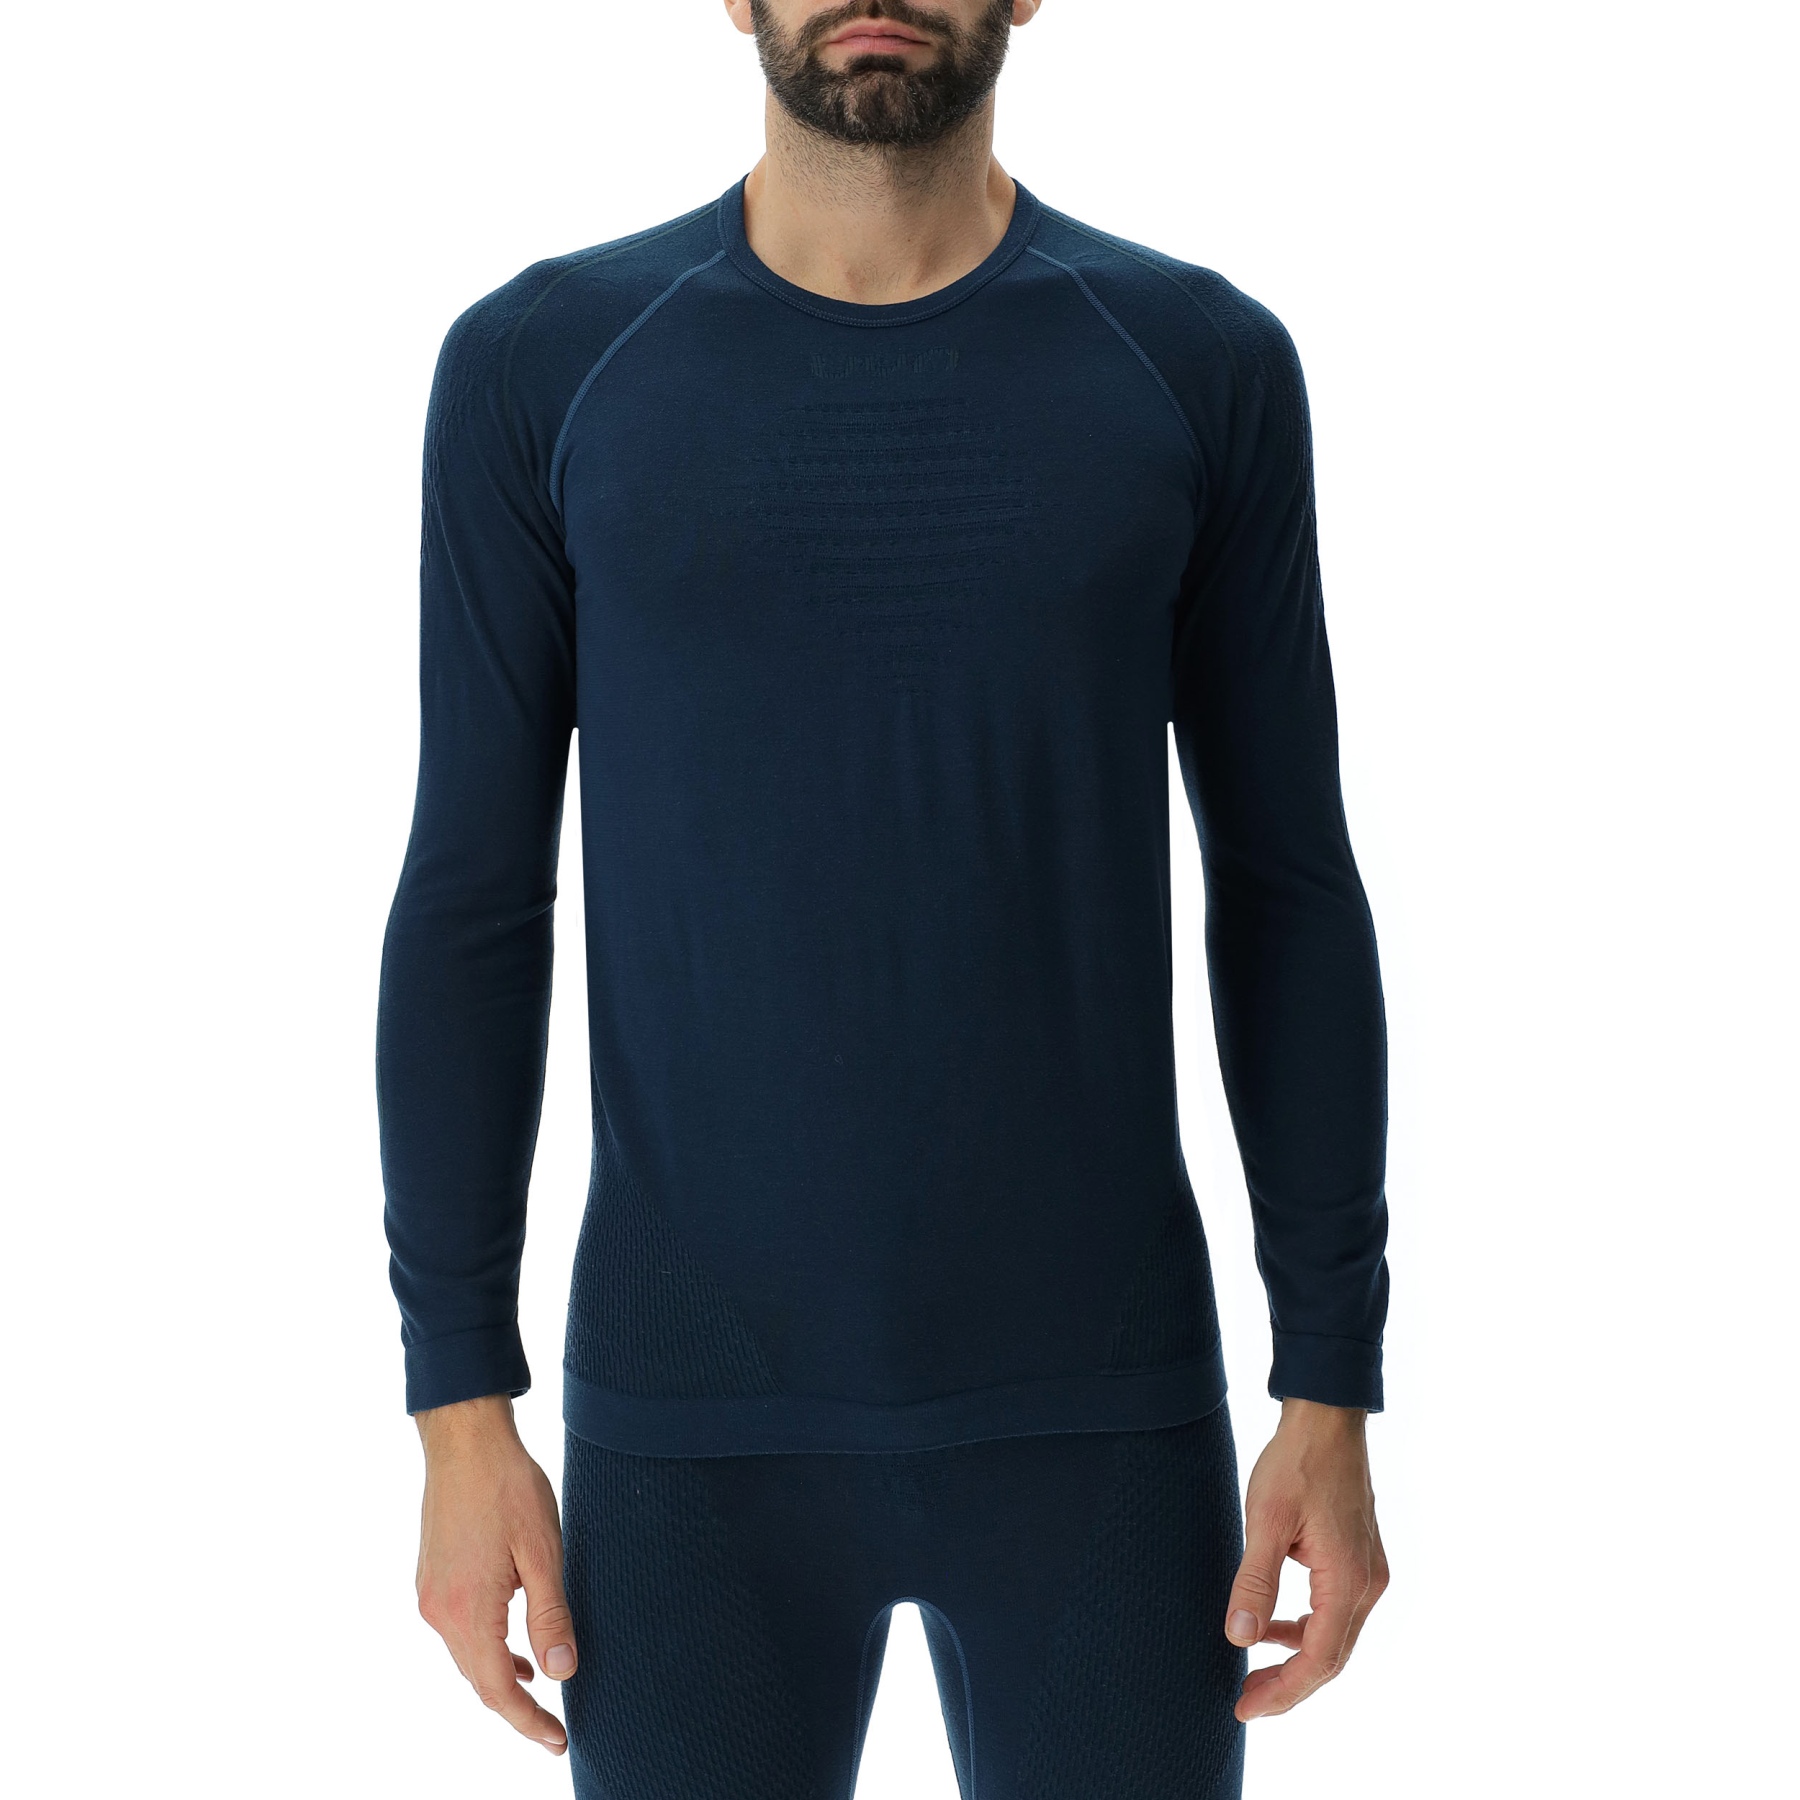 Produktbild von UYN Evolutyon Biotech Unterhemd Herren - Blue Poseidon